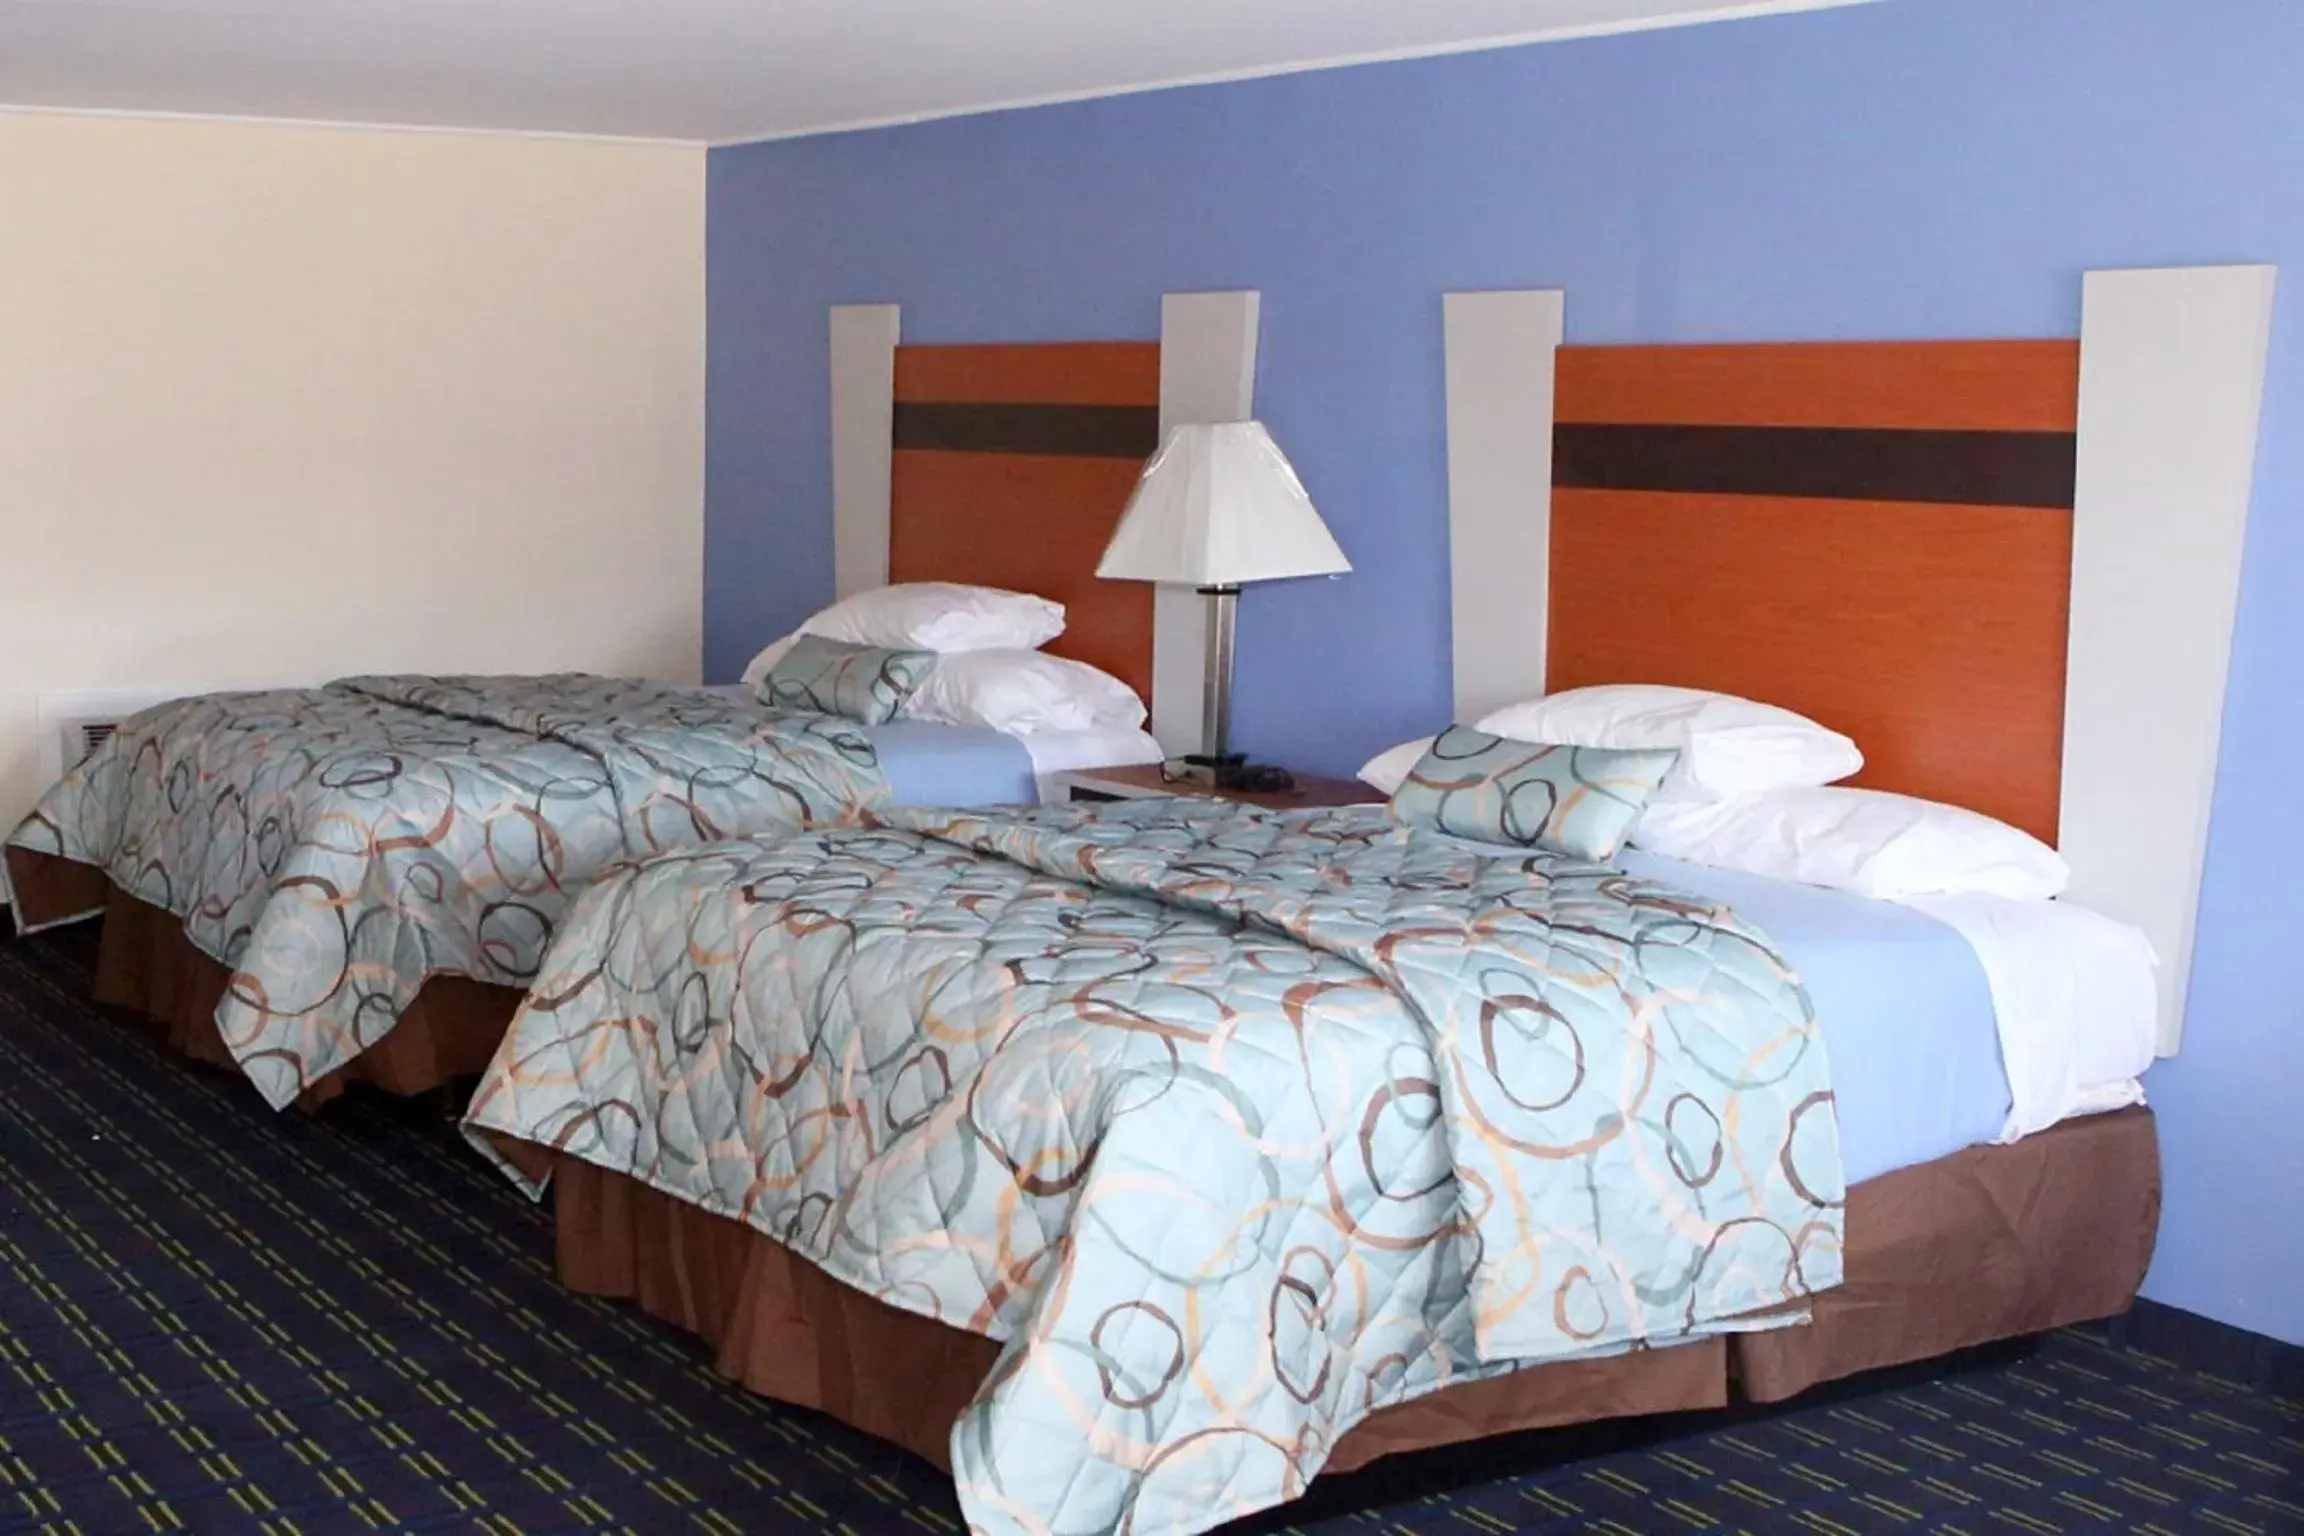 Bed in Days Inn by Wyndham - Cape Cod Area